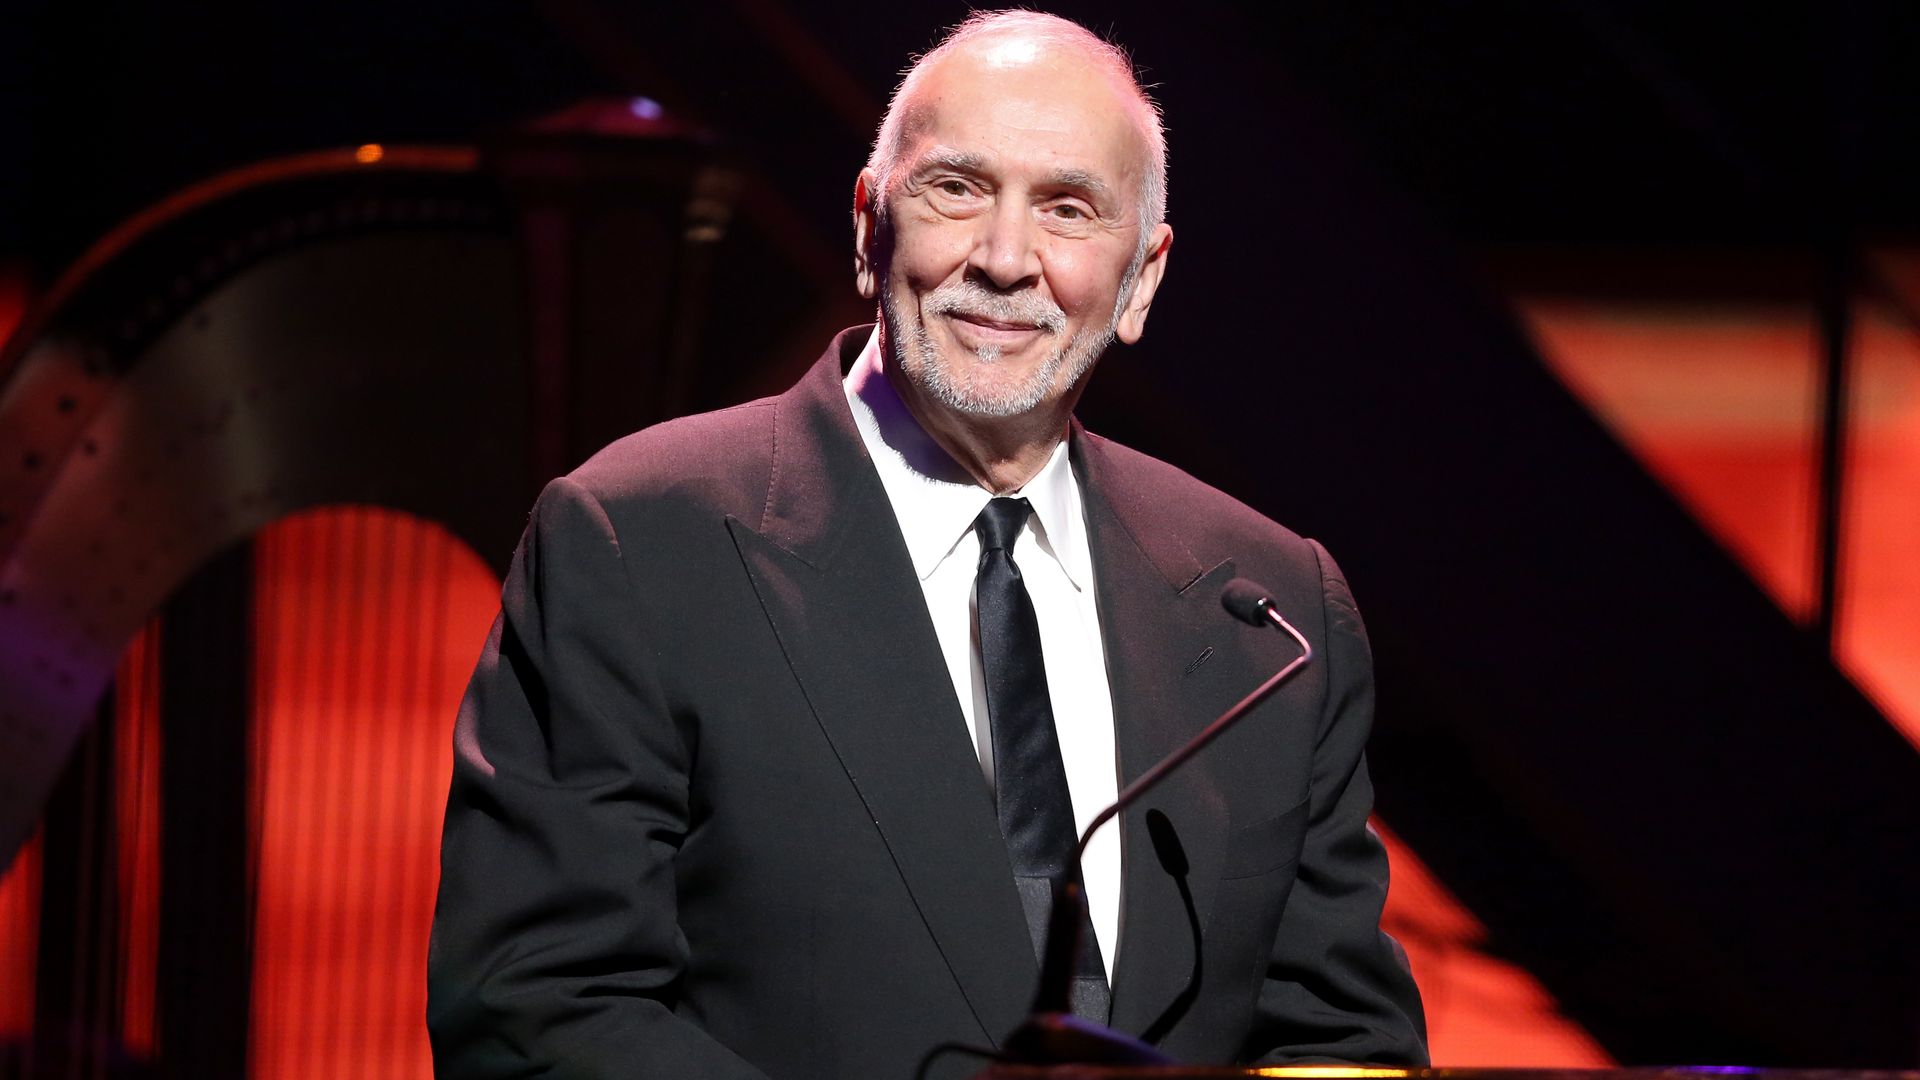 Frank Langella smiling while hosting an award